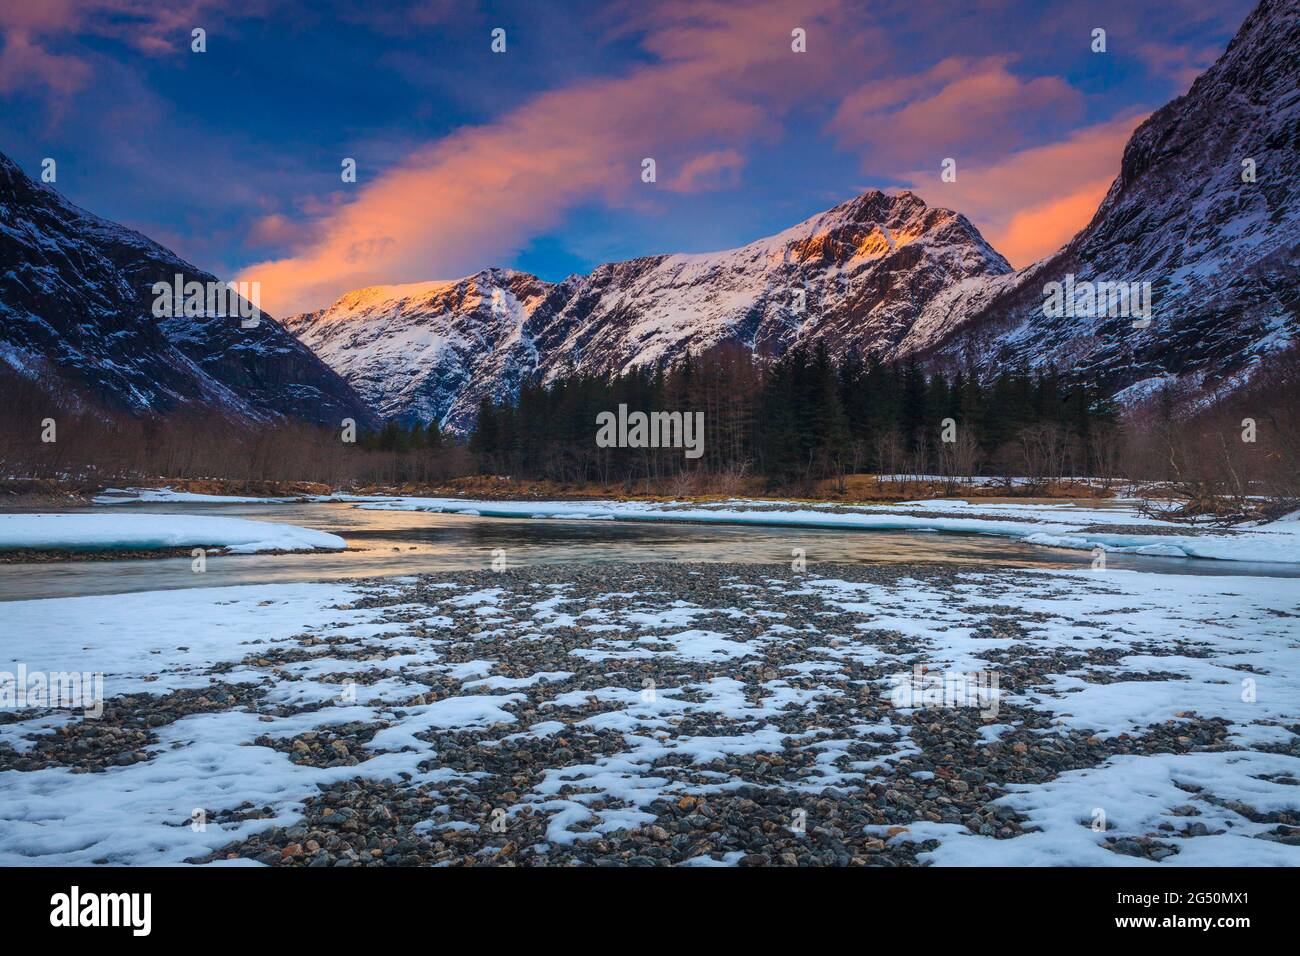 Goldene Stunde Landschaft mit bunten Himmel, Berg und Schnee an einem Winterabend in Romsdalen Tal, Rauma kommune, Møre Og Romsdal, Norwegen, Skandinavien. Stockfoto